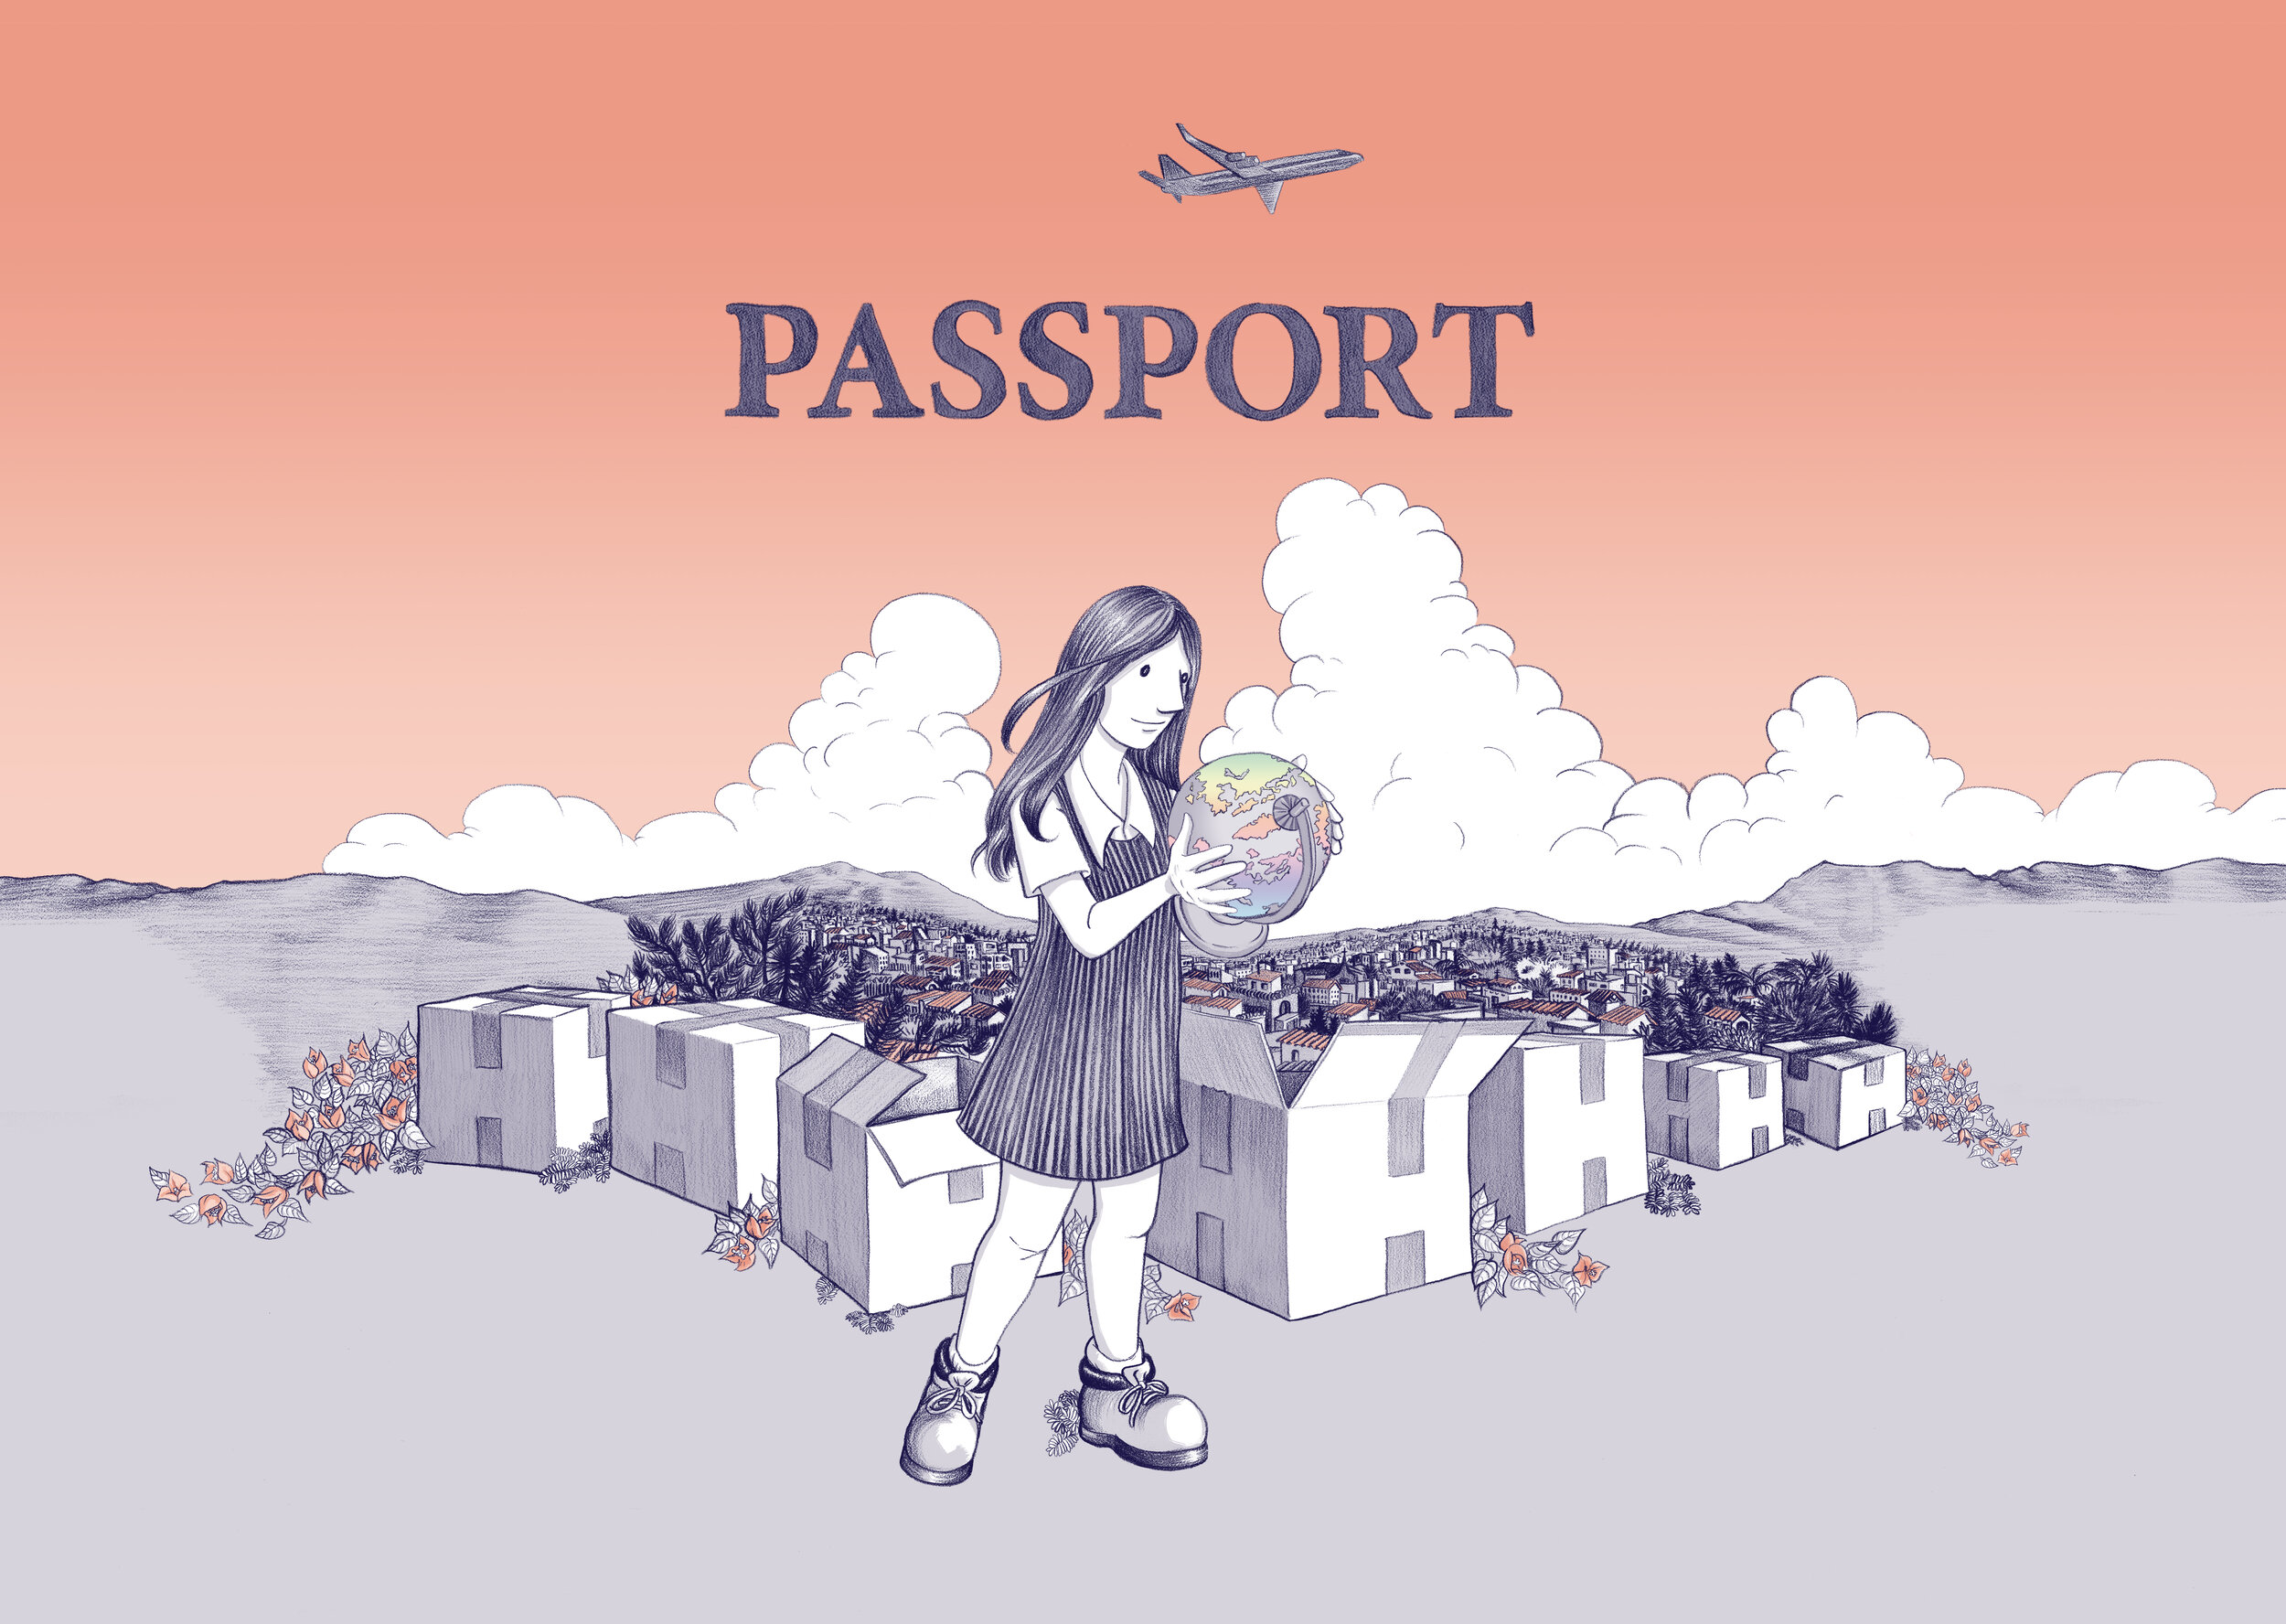 Passport Cover Image